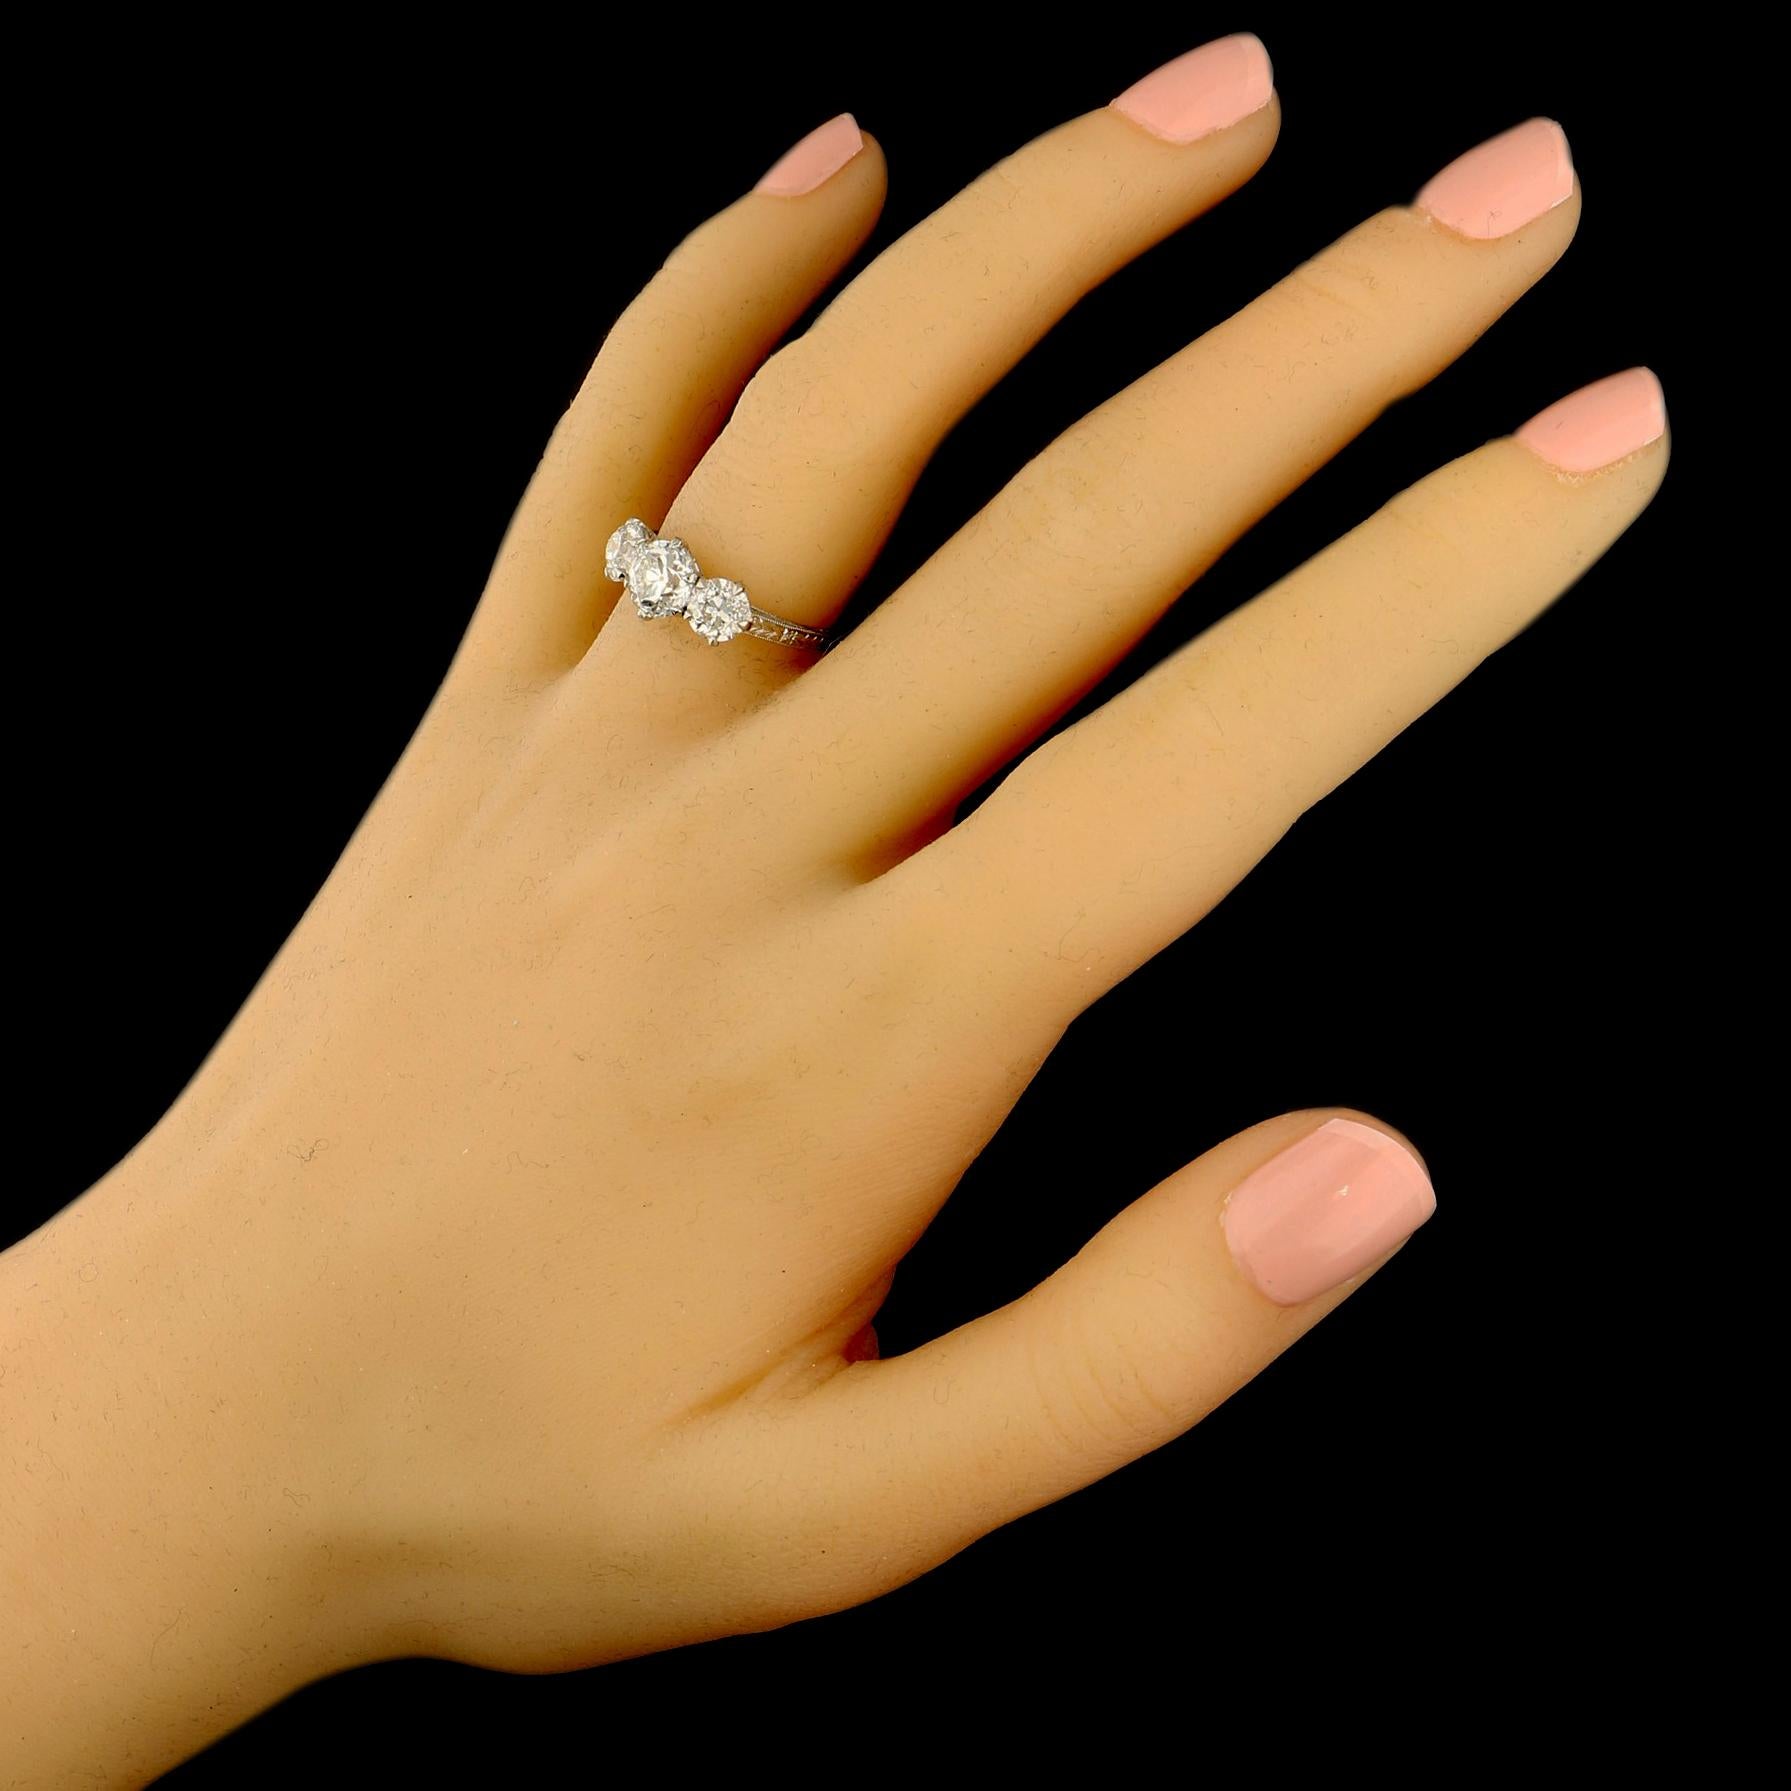 3 carat engagement ring on hand